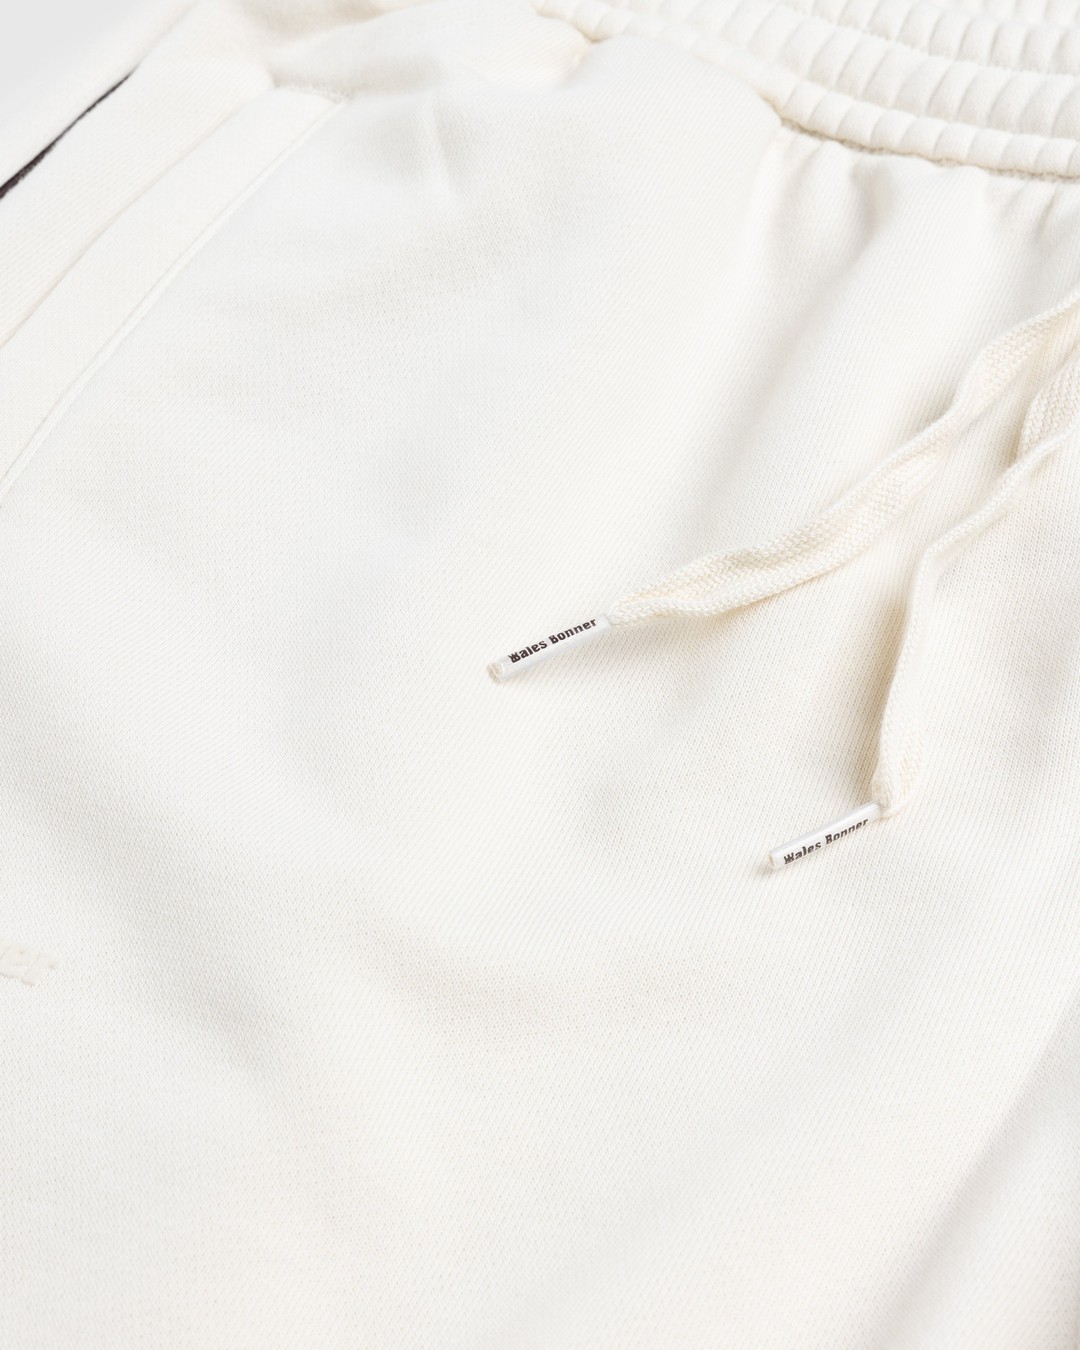 Adidas x Wales Bonner – Sweatpants Wonder White - Pants - Beige - Image 6